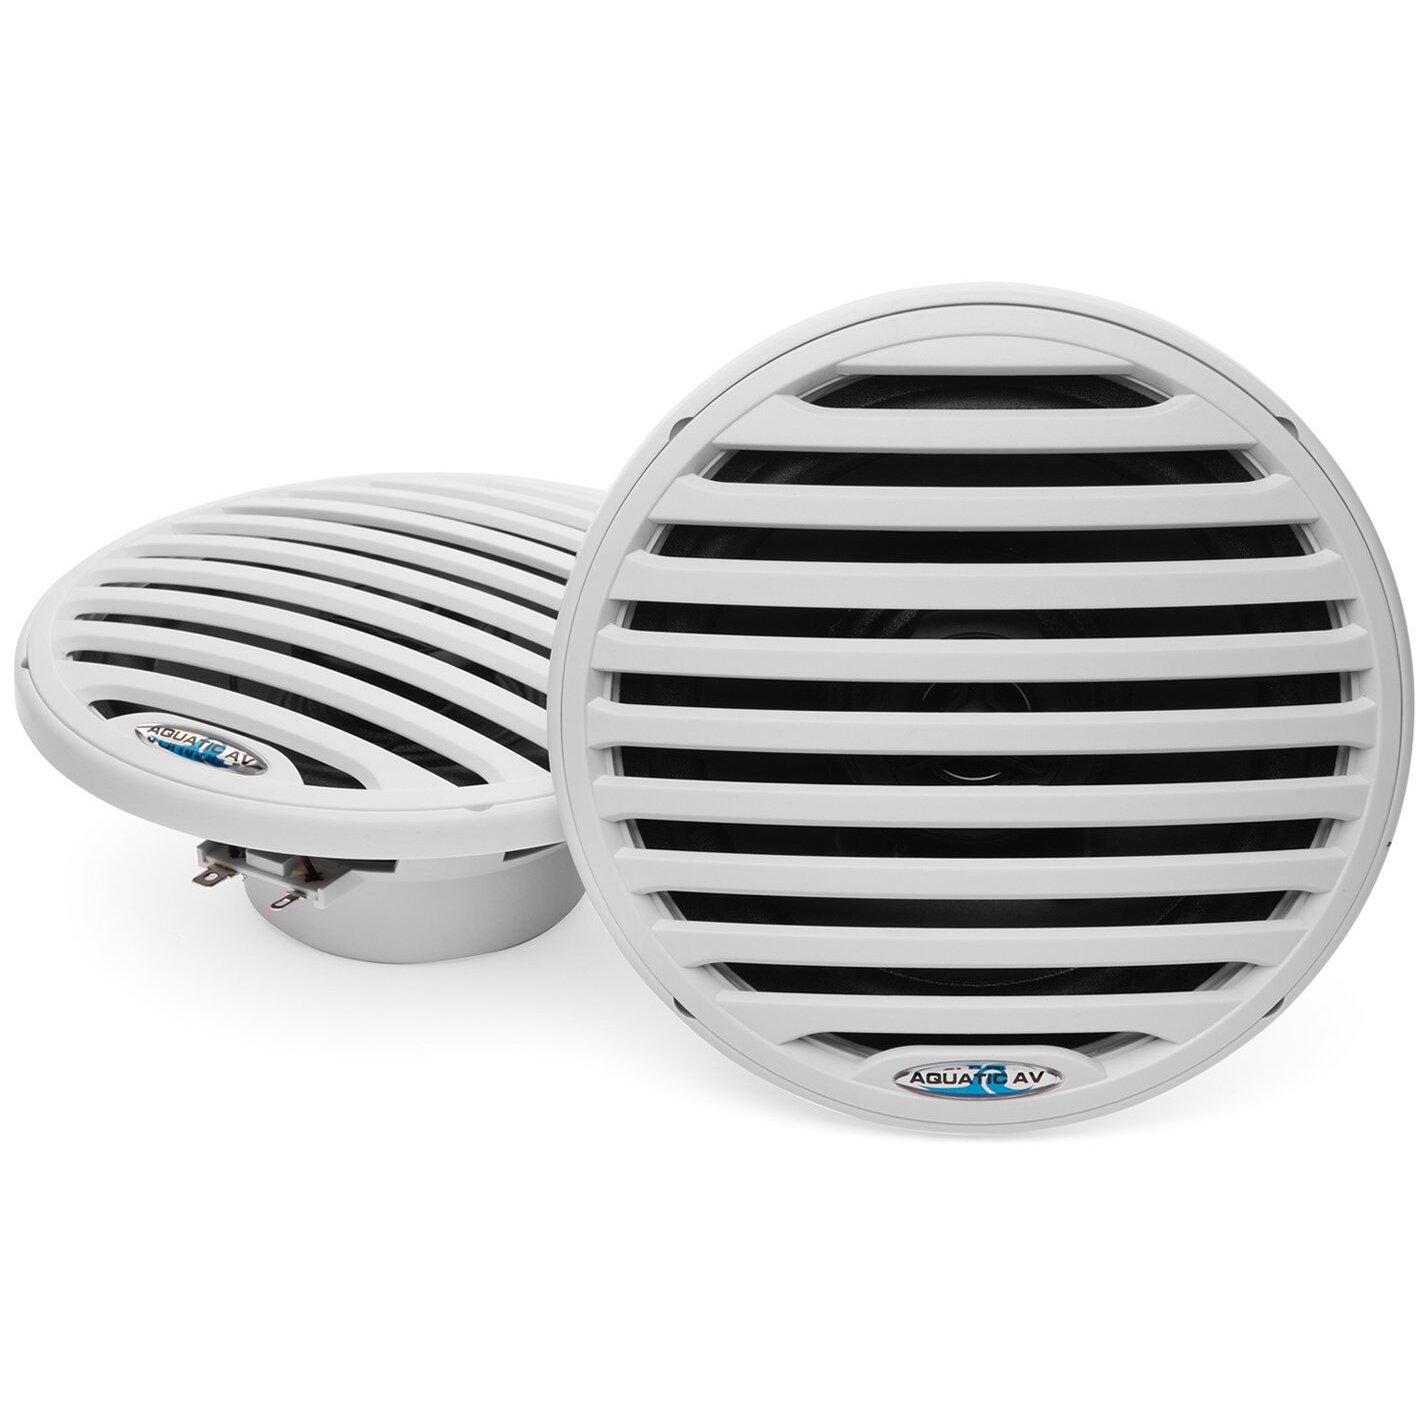 Aquatic AV EC121 White 6.5" Coaxial 80 Watt Waterproof Marine Speakers